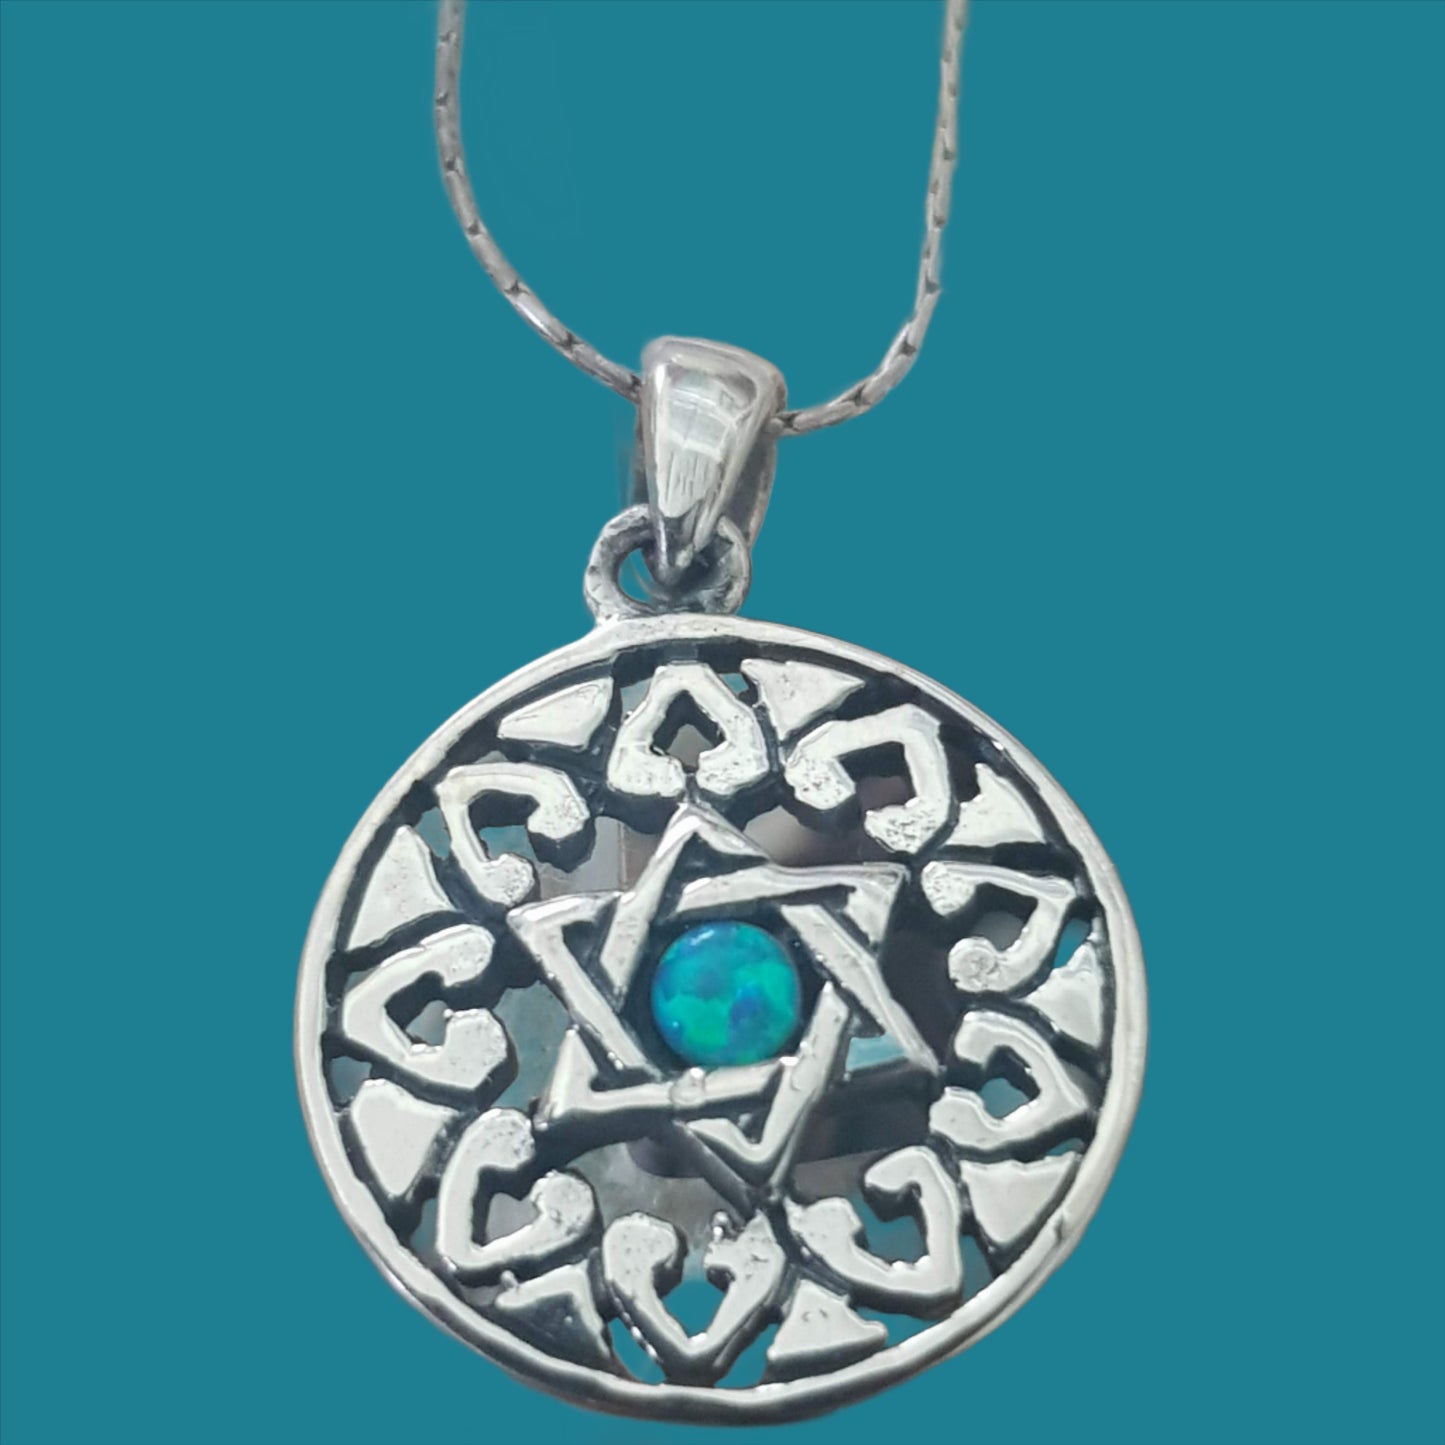 Bluenoemi Jewelry Necklaces Blue Copy of Sterling Silver Star of David pendant, Jewish jewelry